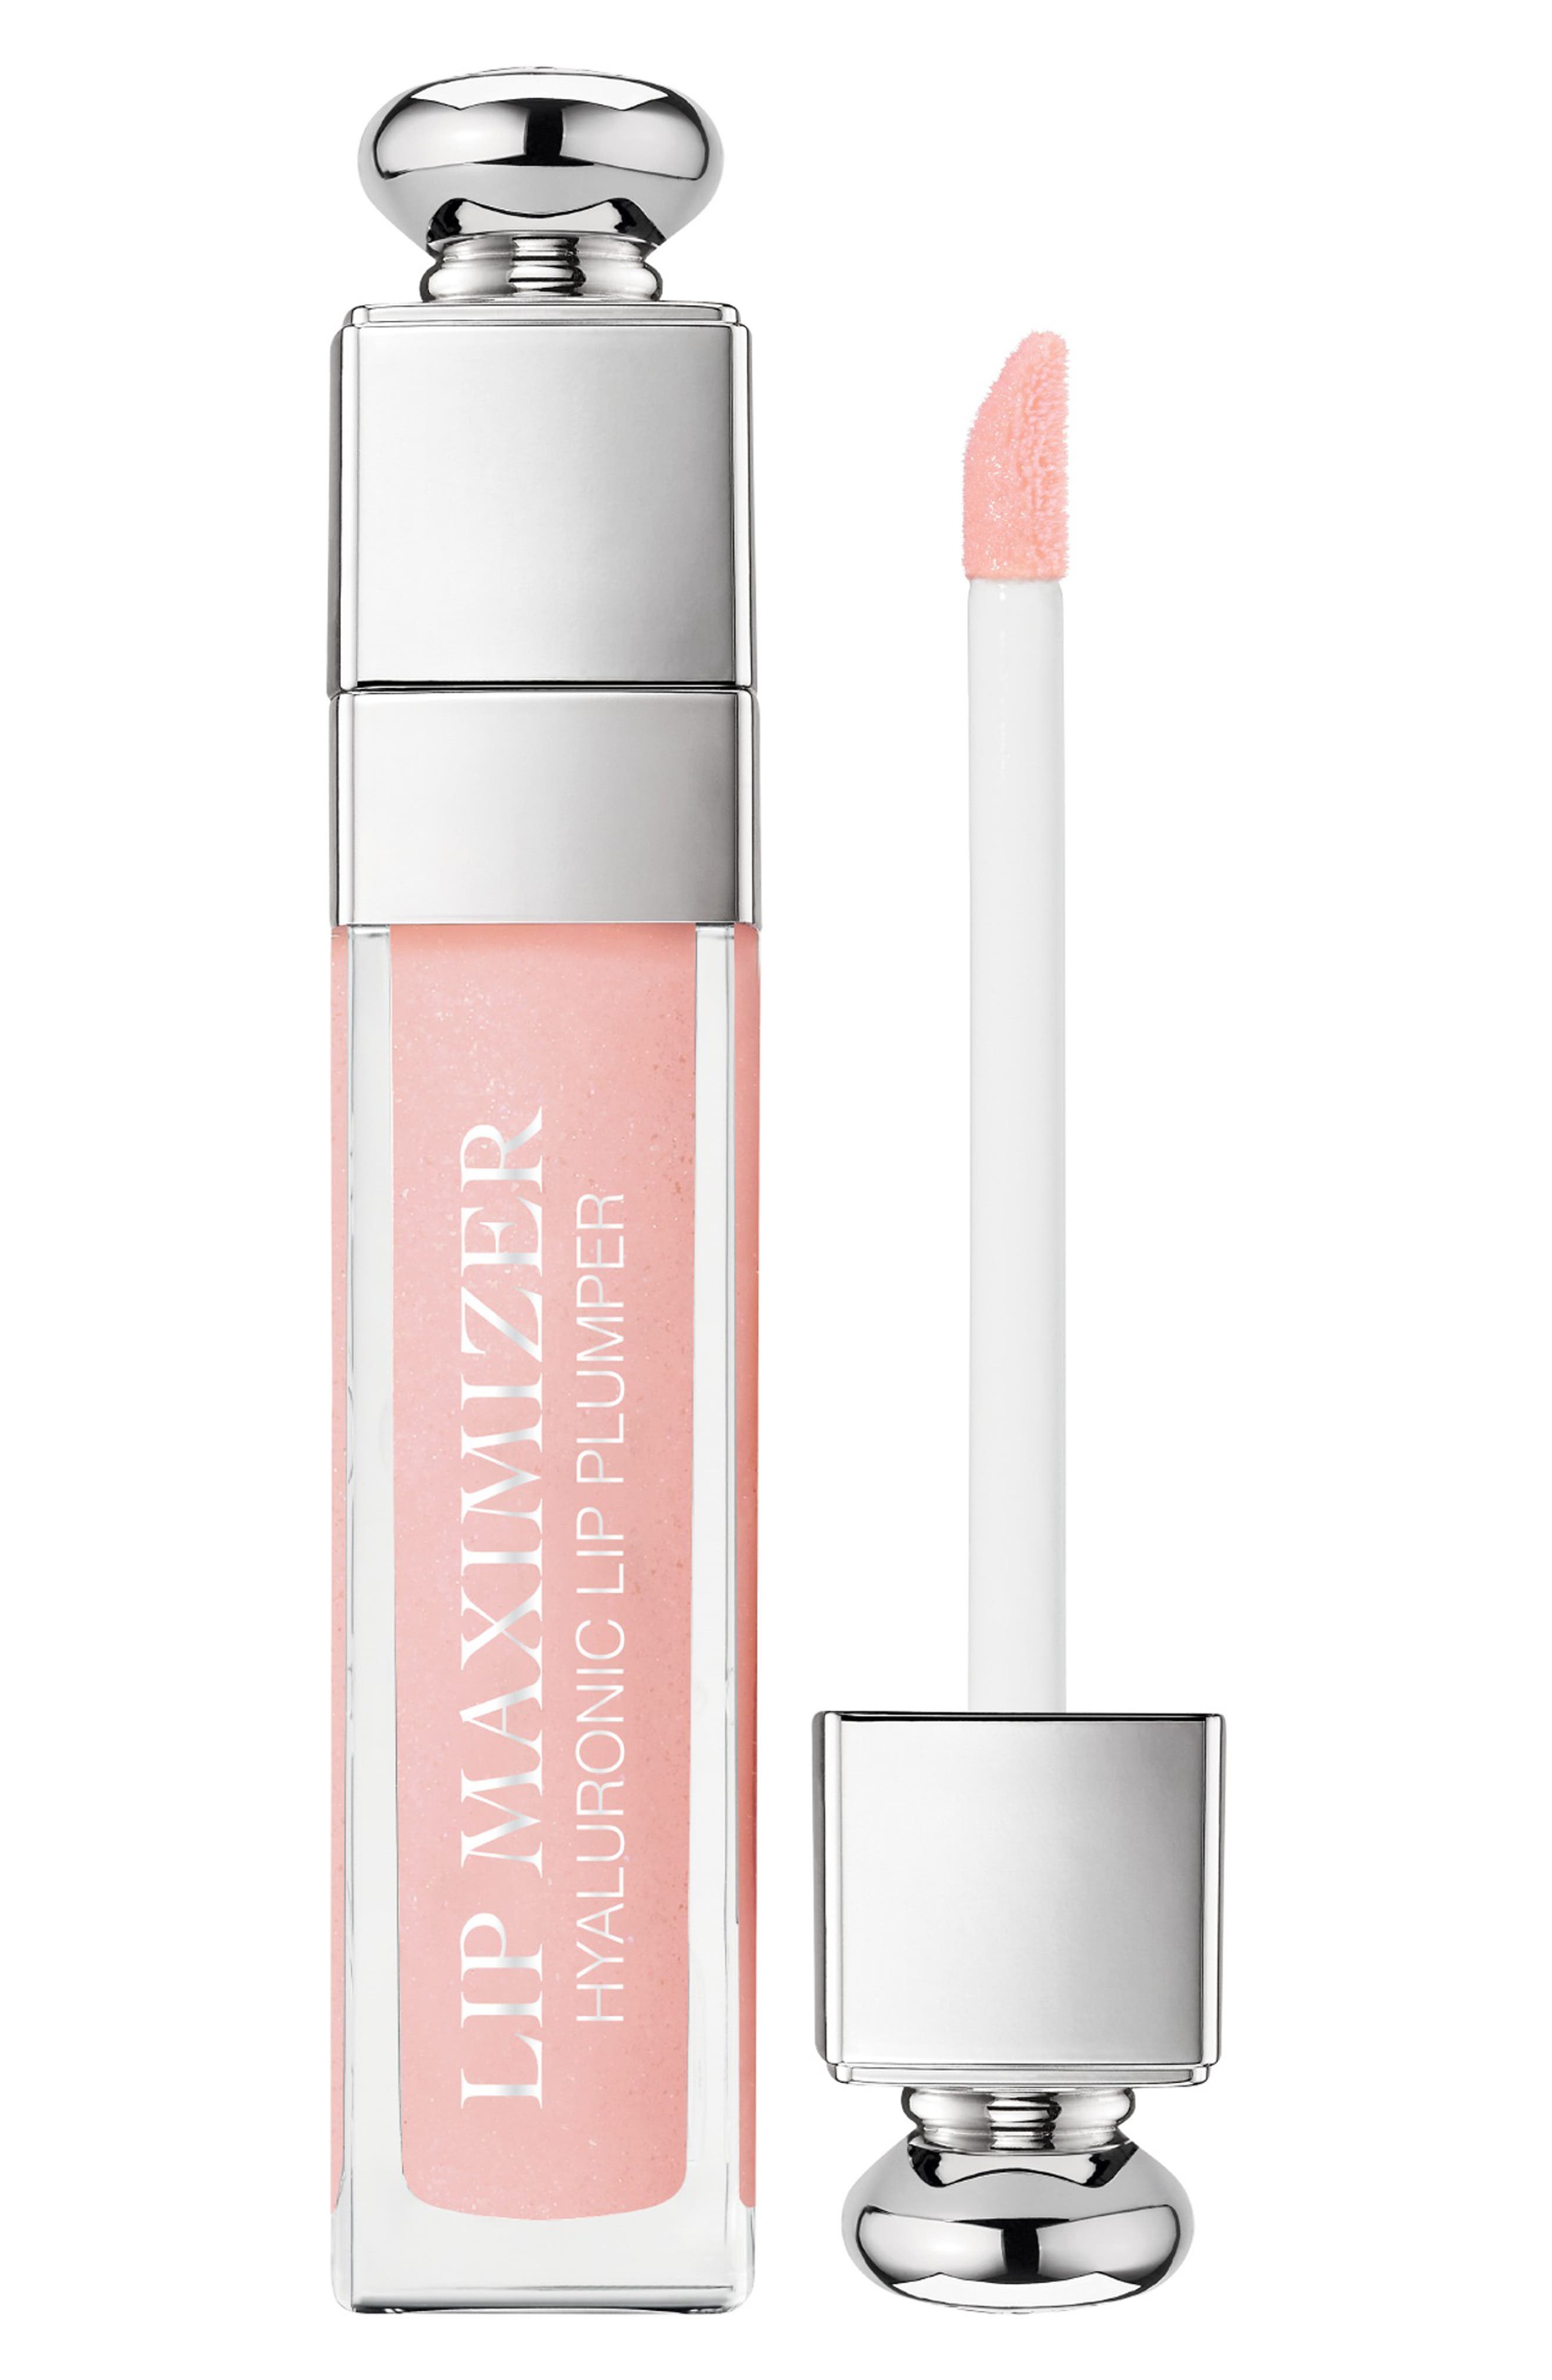 Dior Addict Lip Maximizer Plumping Lip Gloss in 001 Pink/Glow